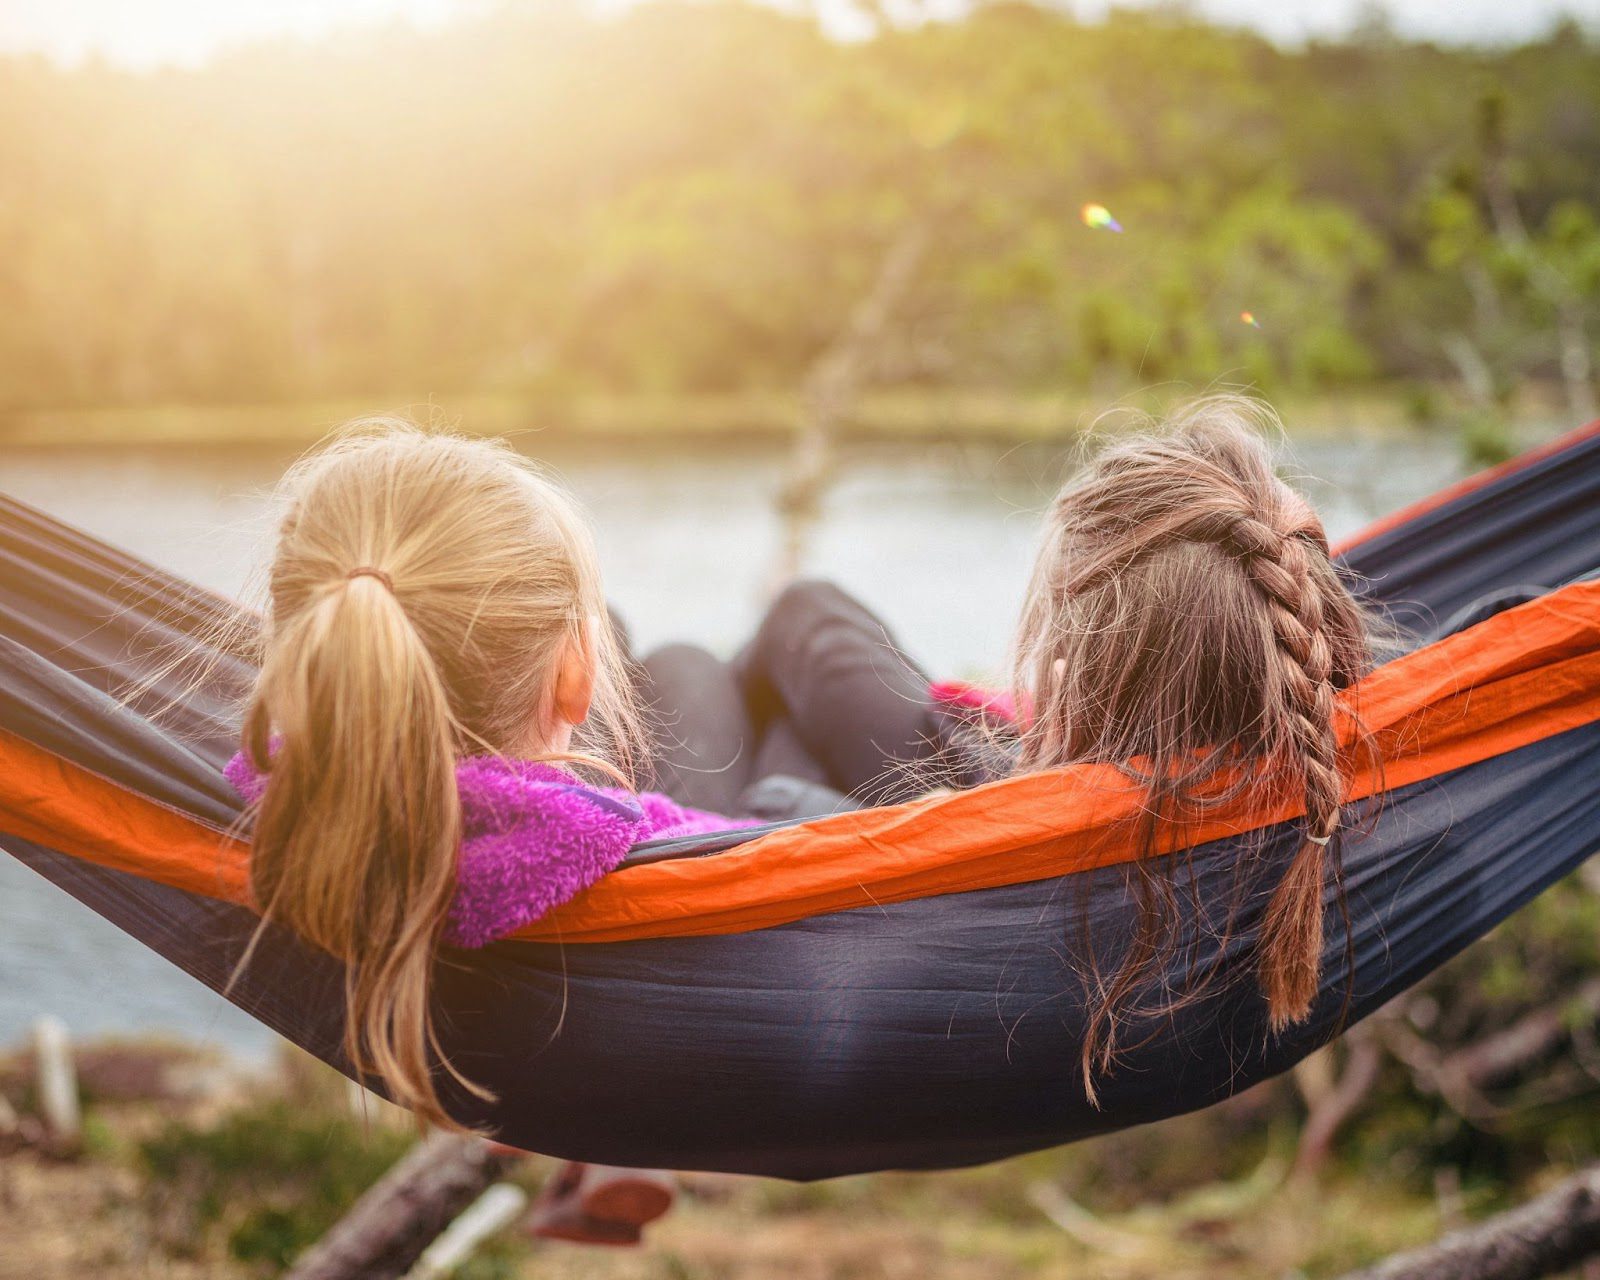 Two girls relaxing in a hammock while enjoying a weekend away